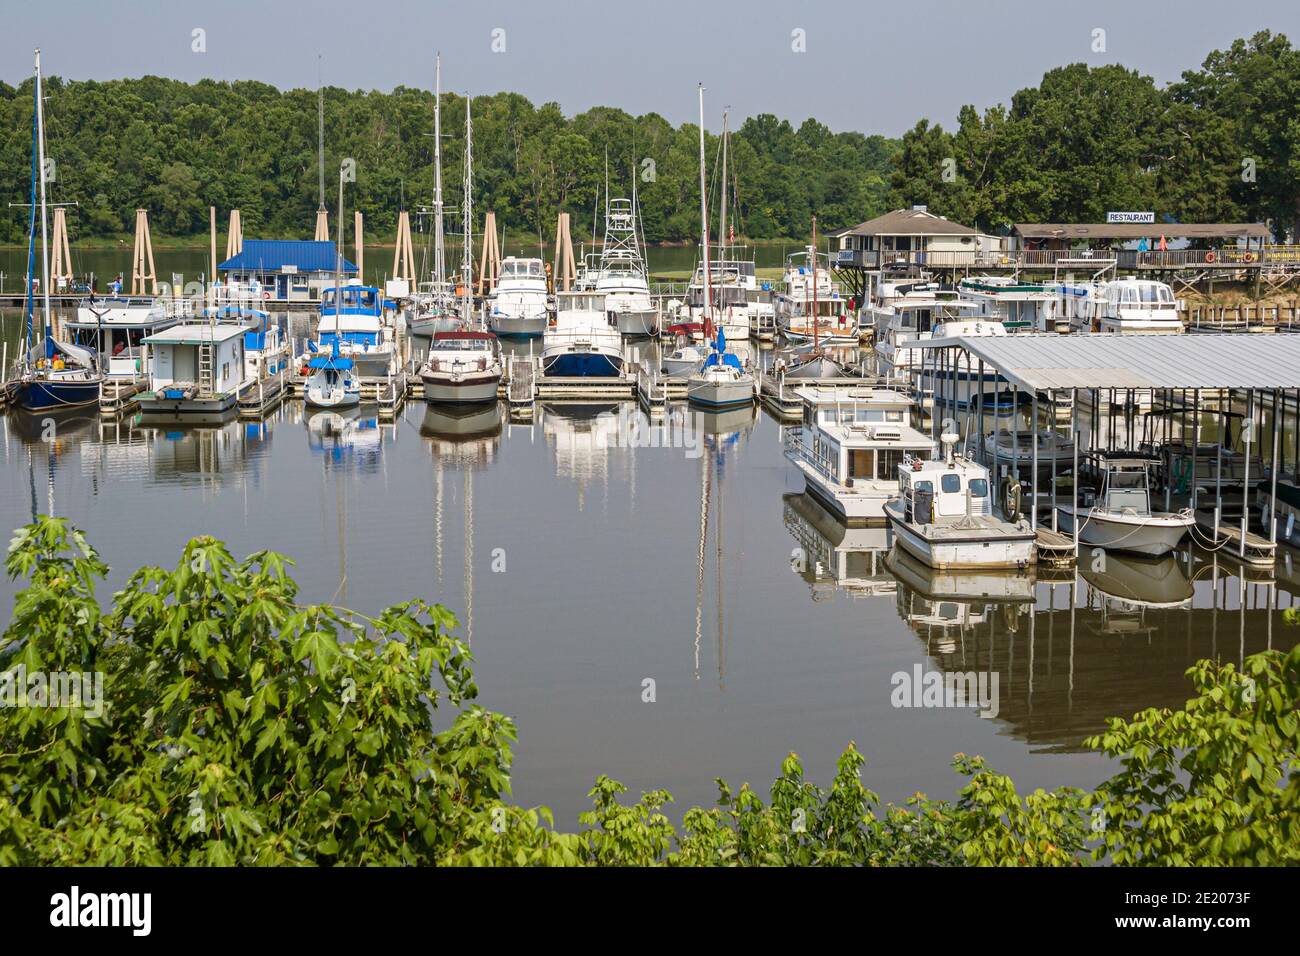 Alabama Demopolis fiume Tombigbee Yacht bacino acqua marina, ristorante molo barche yacht, Foto Stock